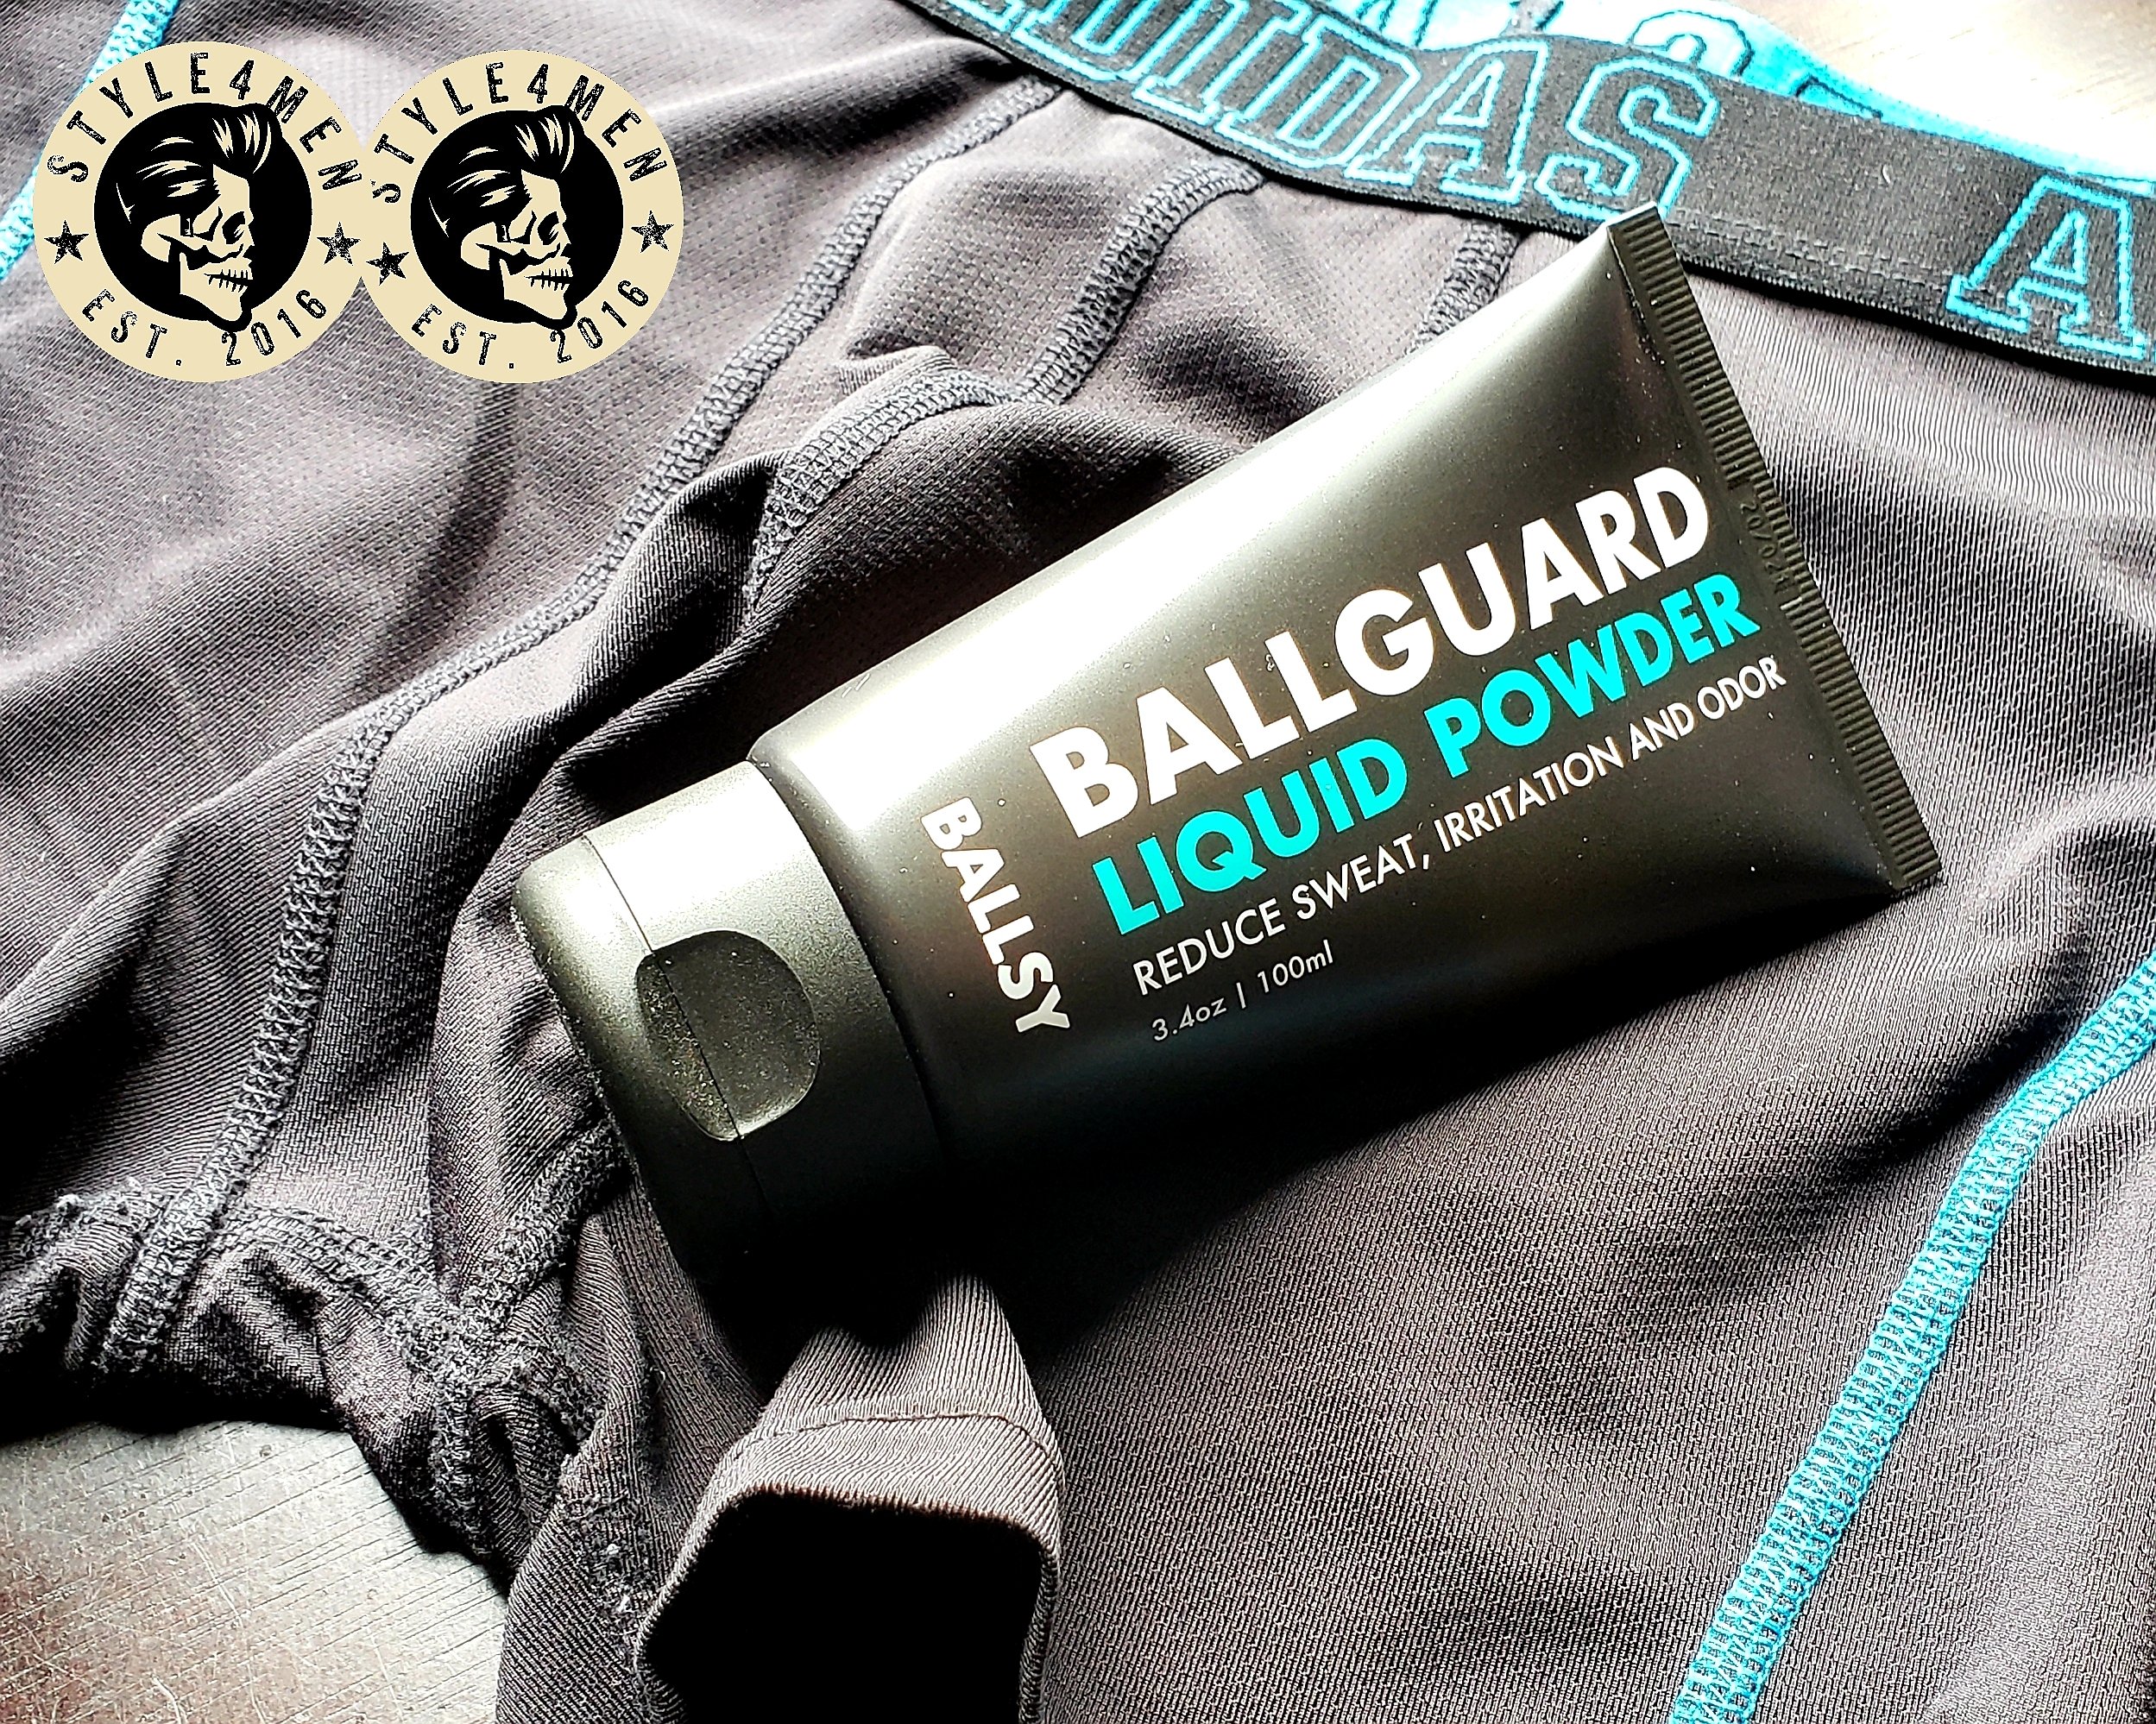 BALLGUARD Liquid Powder by BALLSY